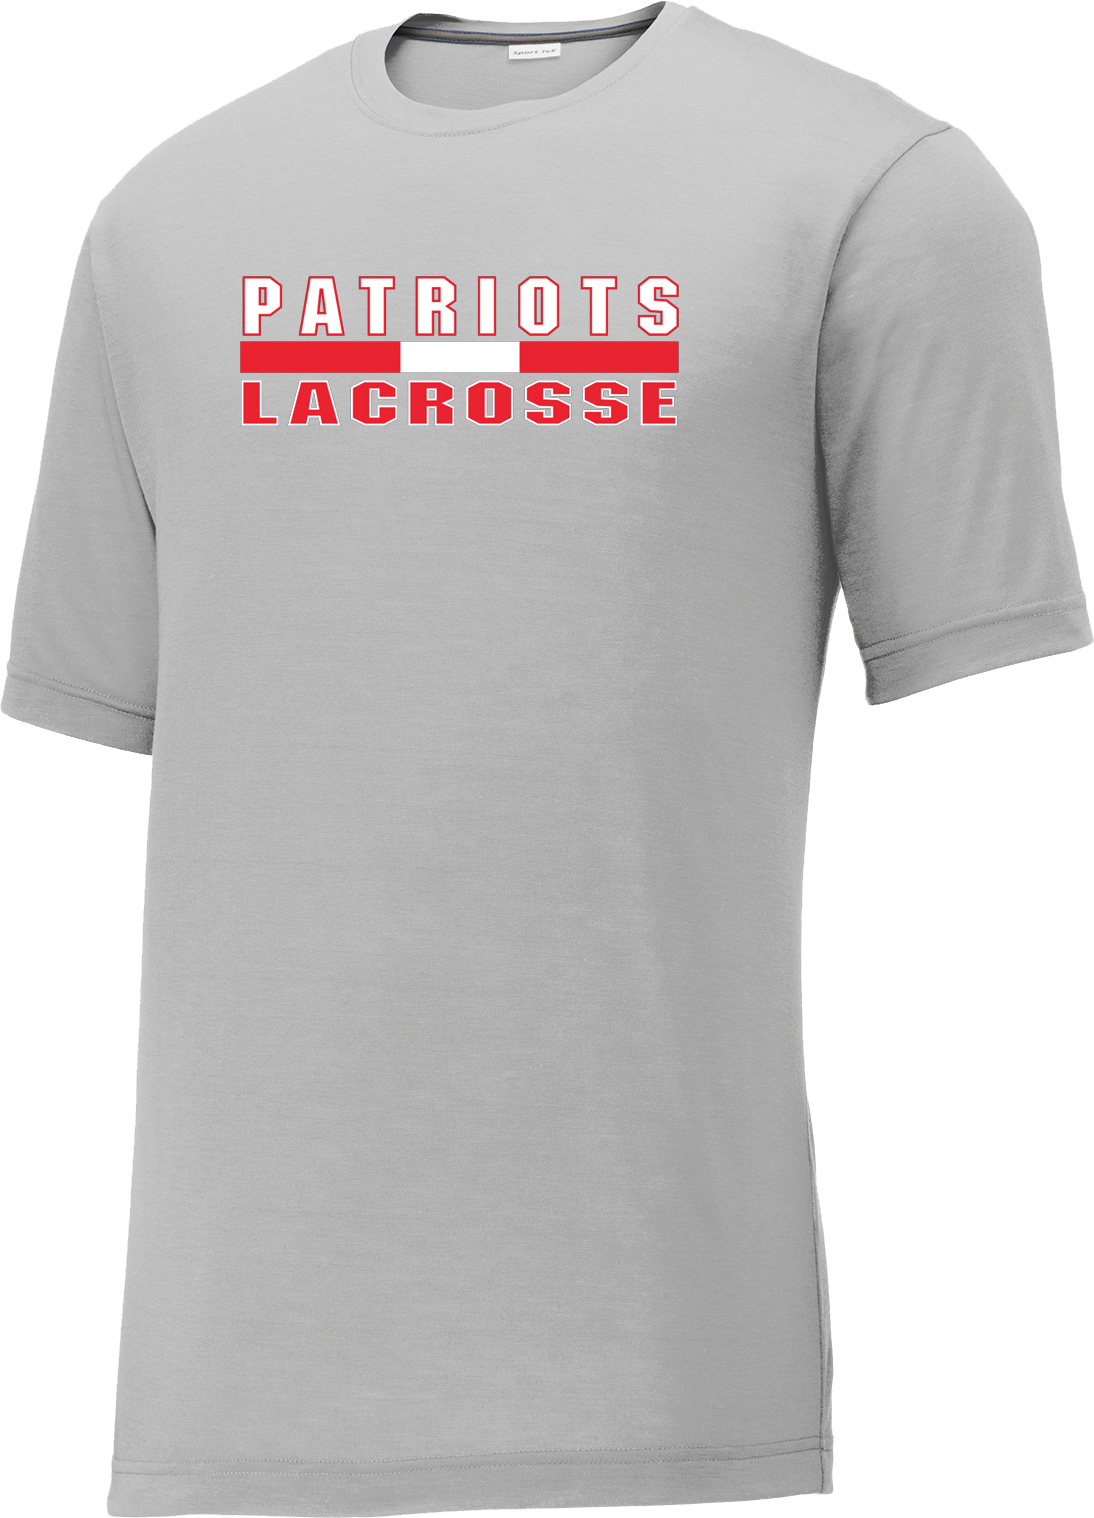 Bob Jones Lacrosse 10th Season Silver CottonTouch Performance T-Shirt